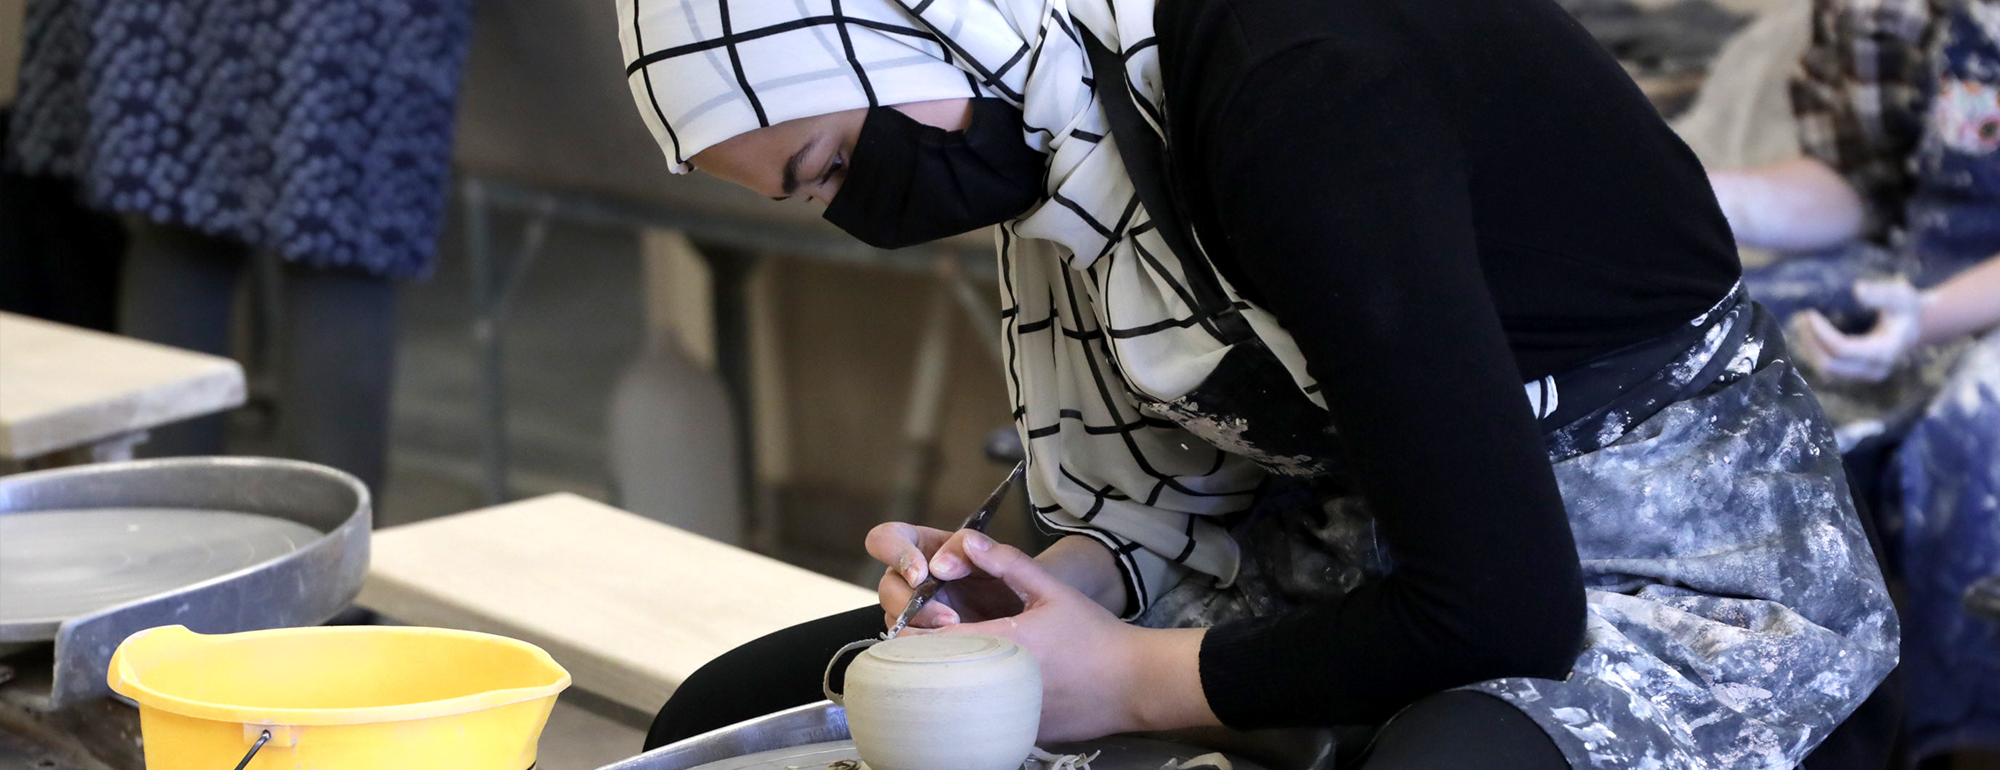 UC Davis student uses a tool to shape clay on a pottery wheel